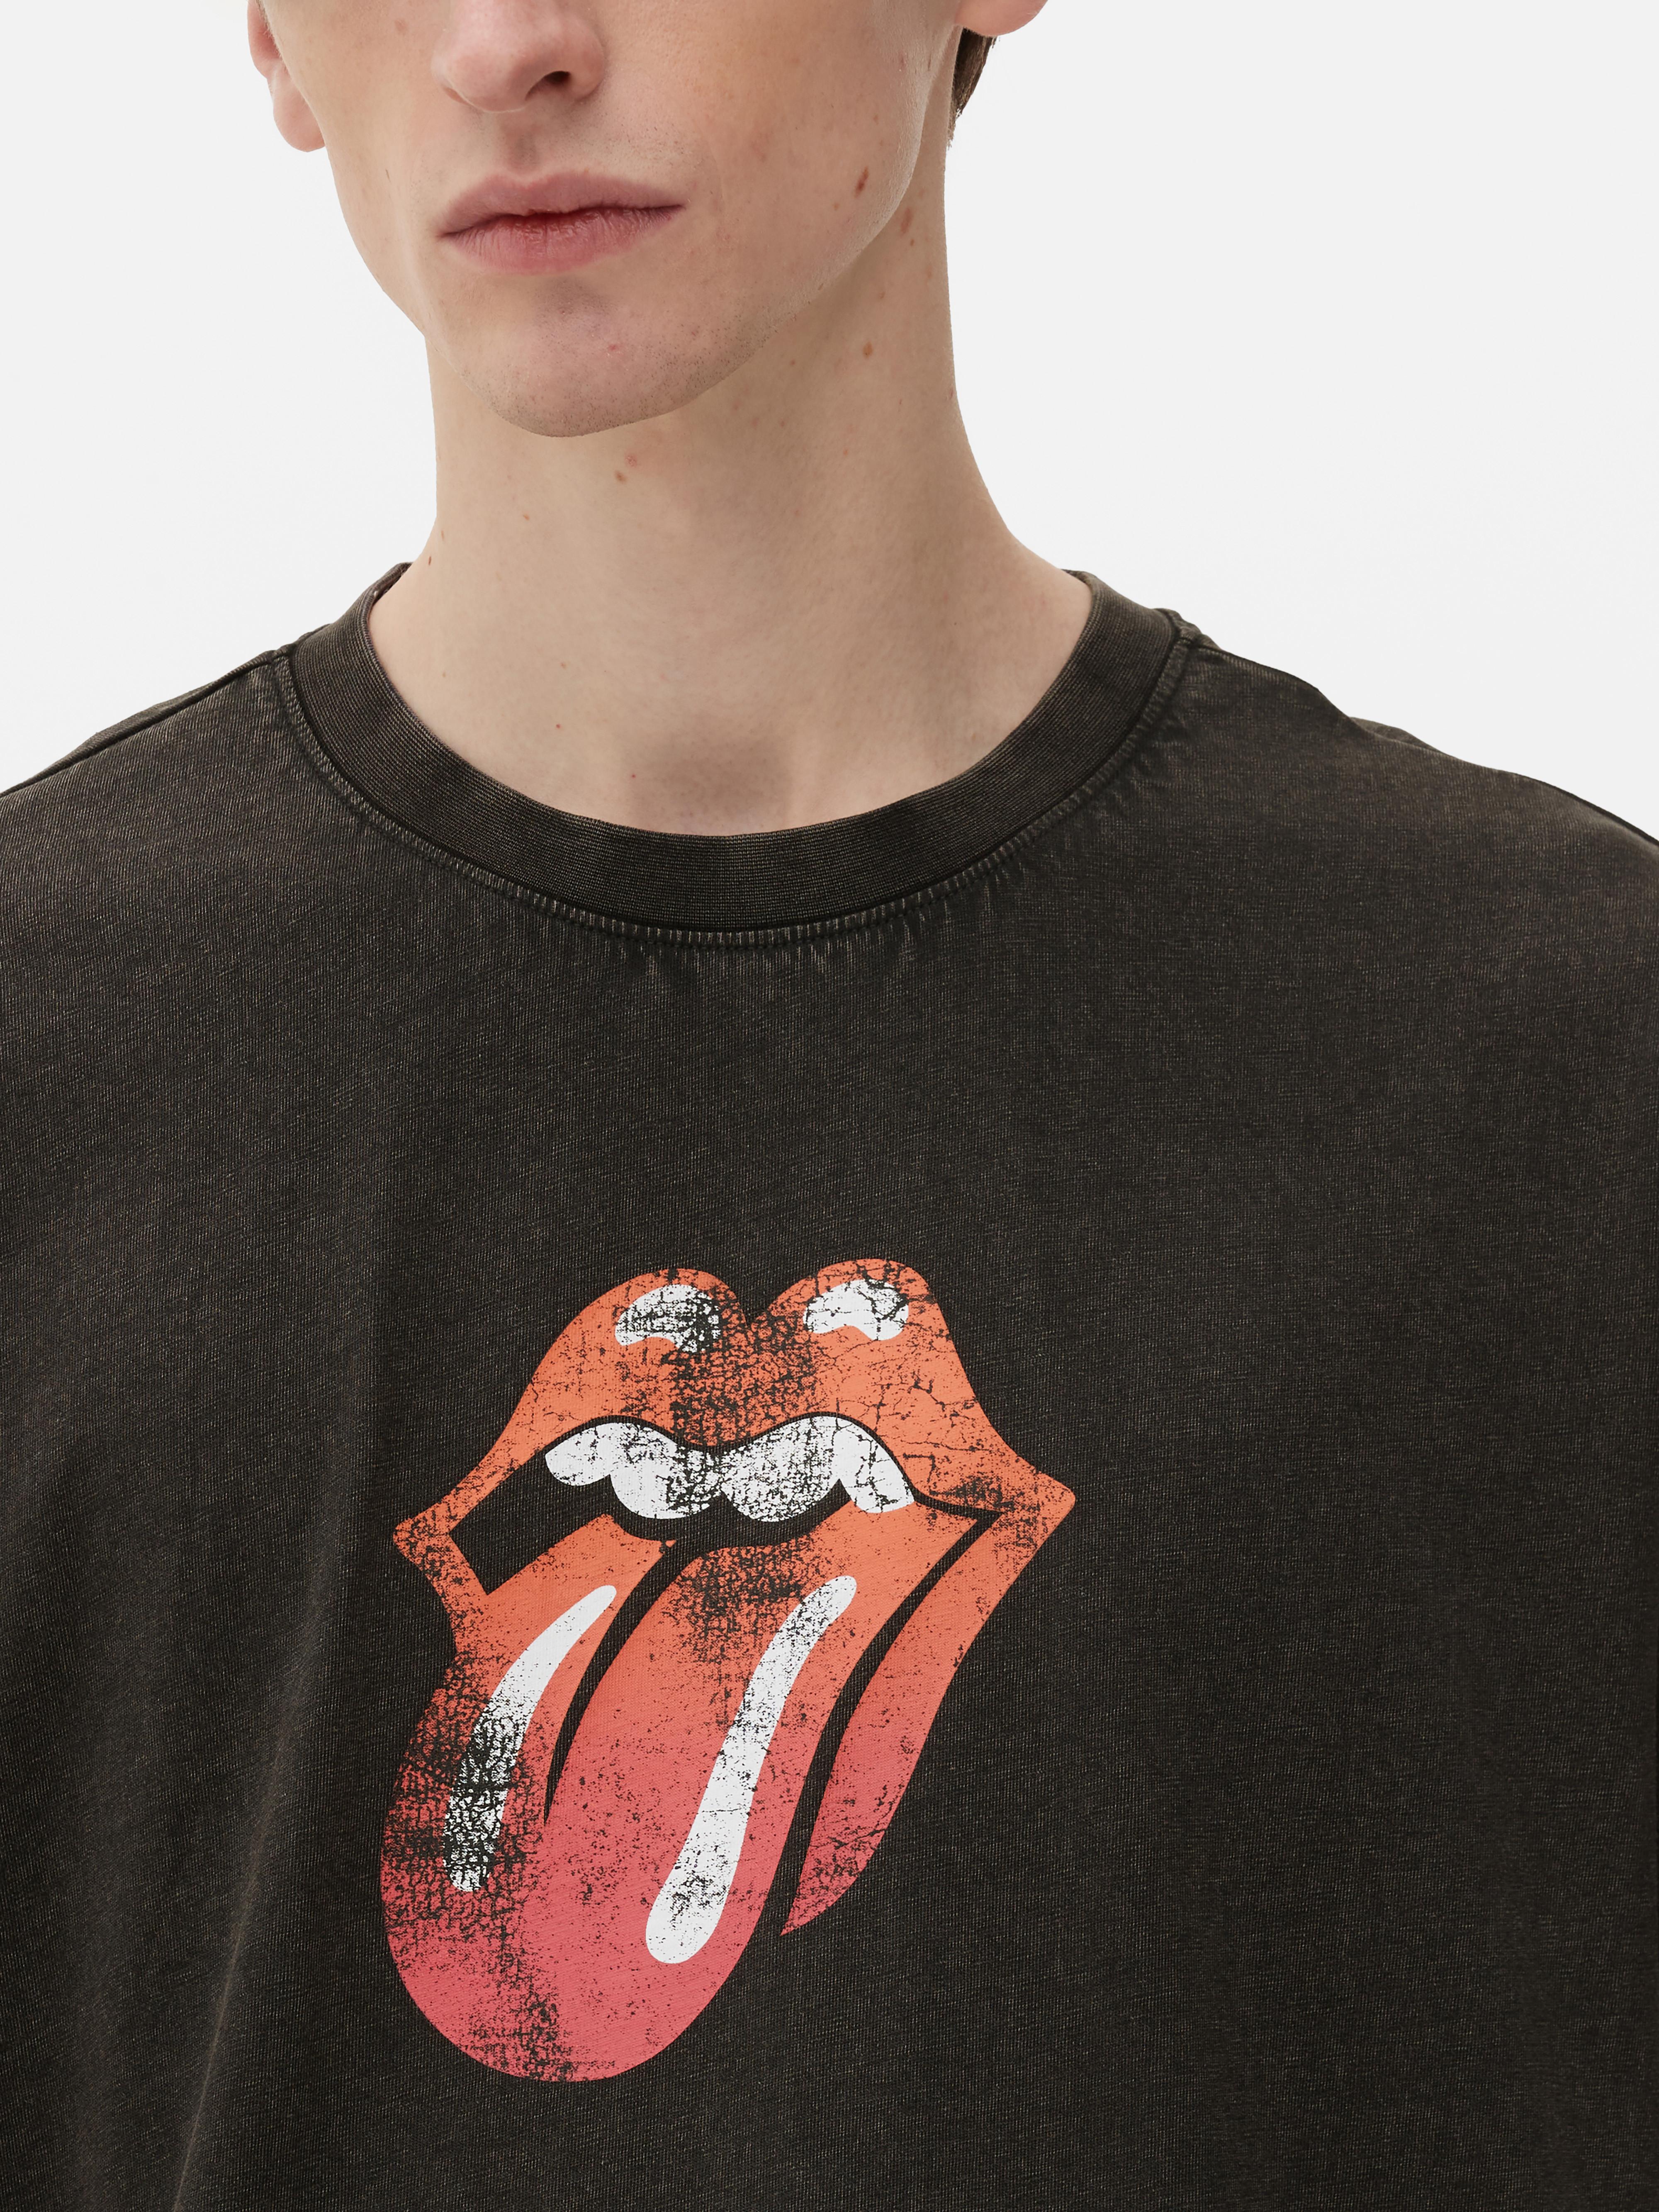 Official Rolling Stone Logo Sweatshirt: Modern Oversized Crewneck Gray -  Rolling Stone Shop